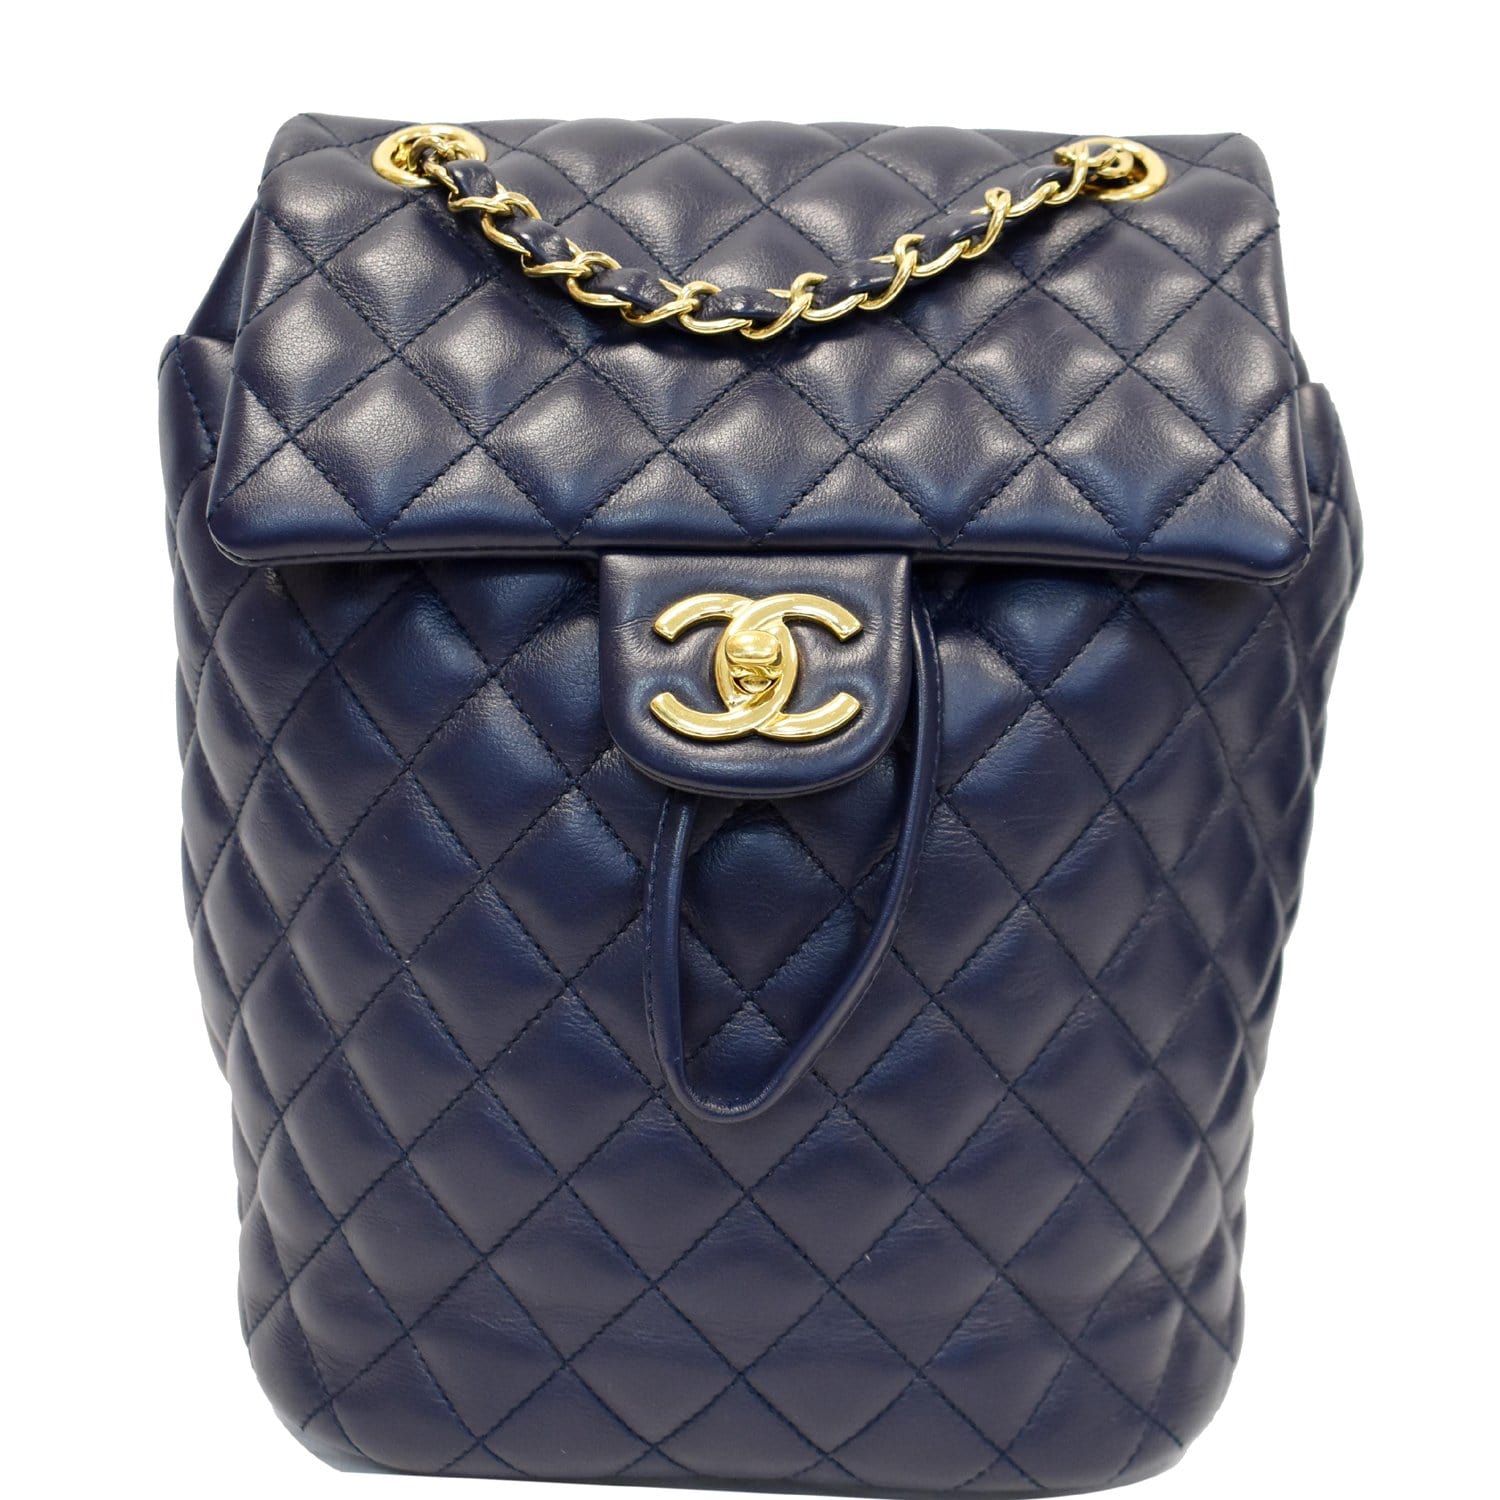 CHANEL Fashion - Backpack  Bags, Backpacks, Chanel backpack